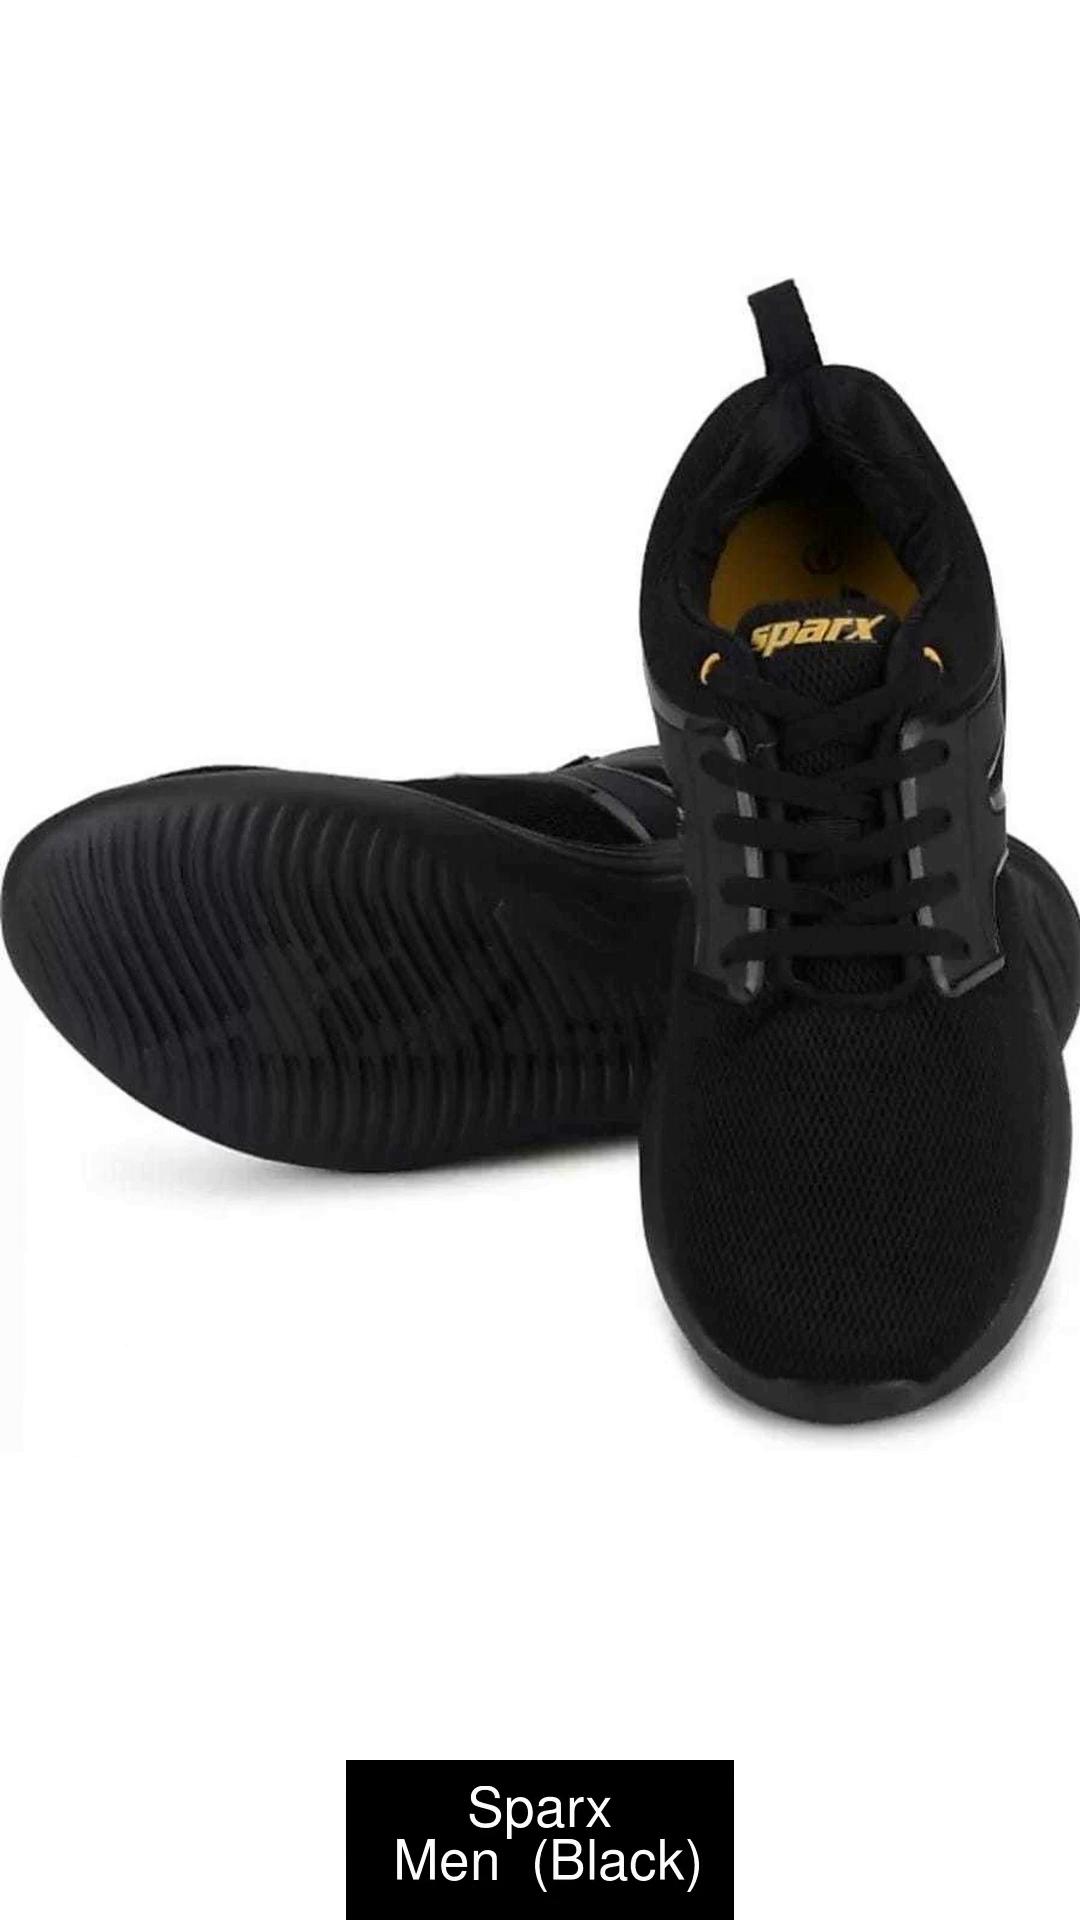 Buy Power walking shoes for men SM 500  Shoes for Men  Relaxo